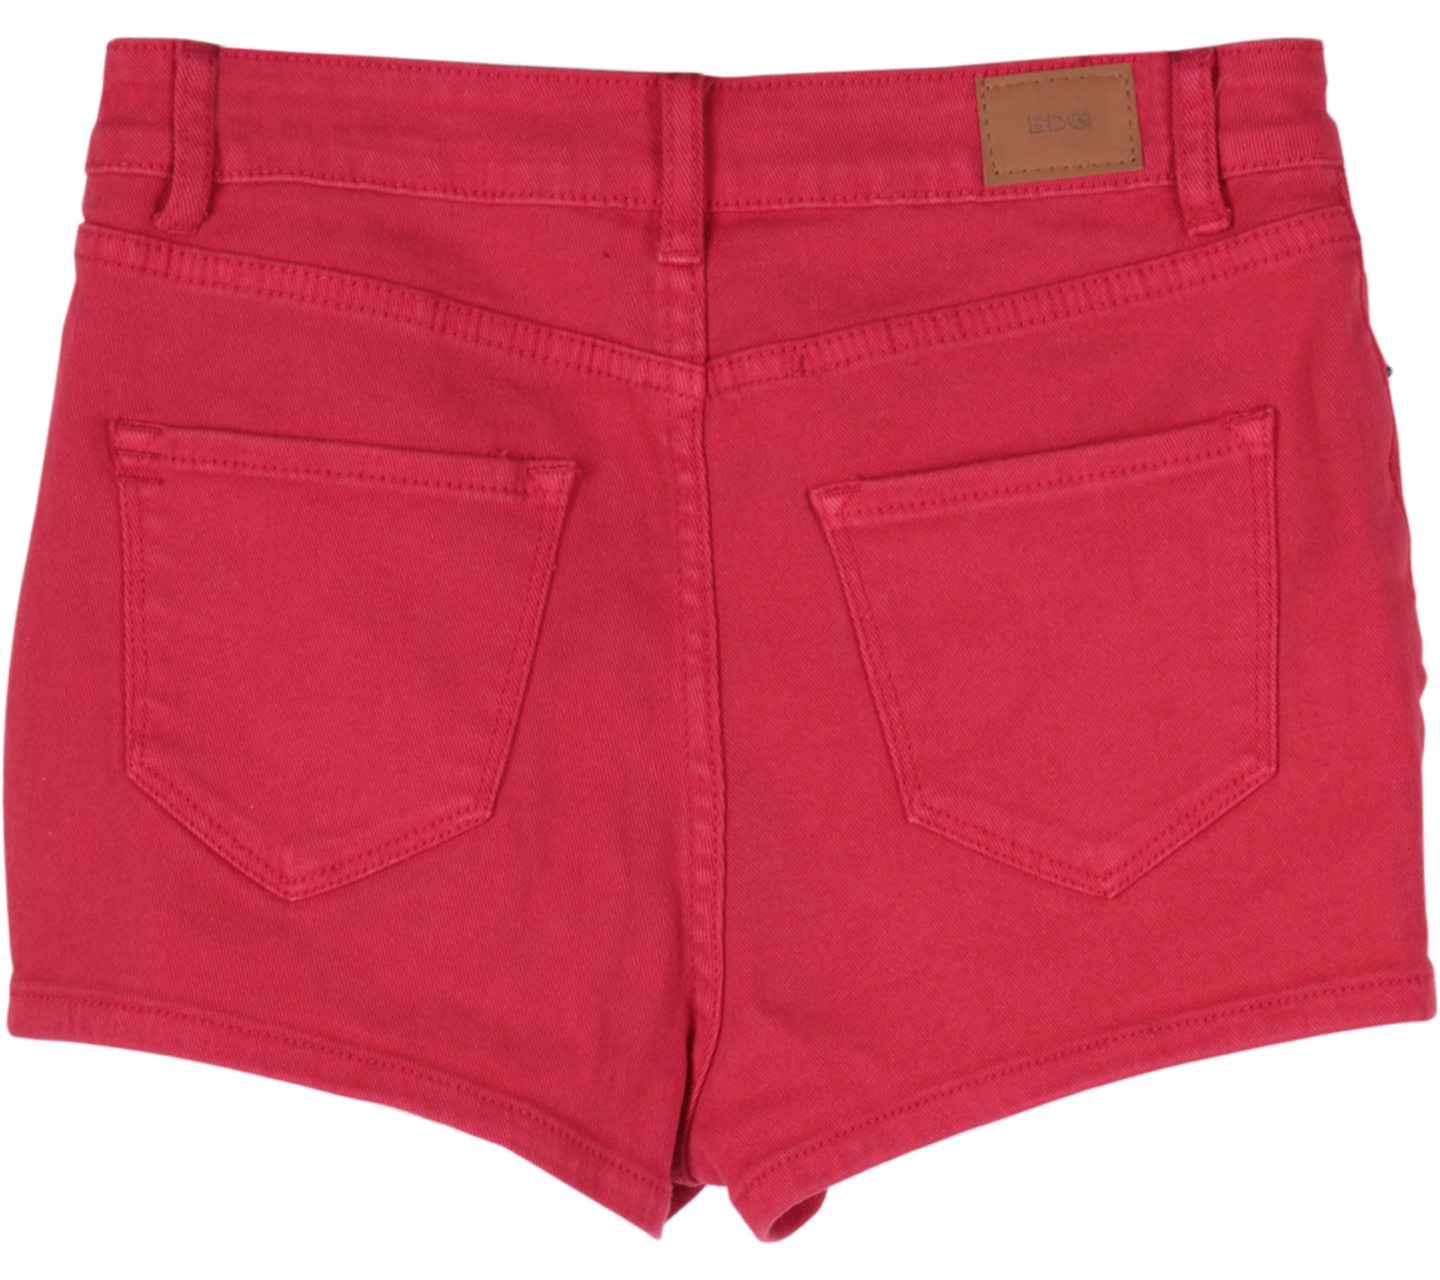 BDG Red Shorts Pants